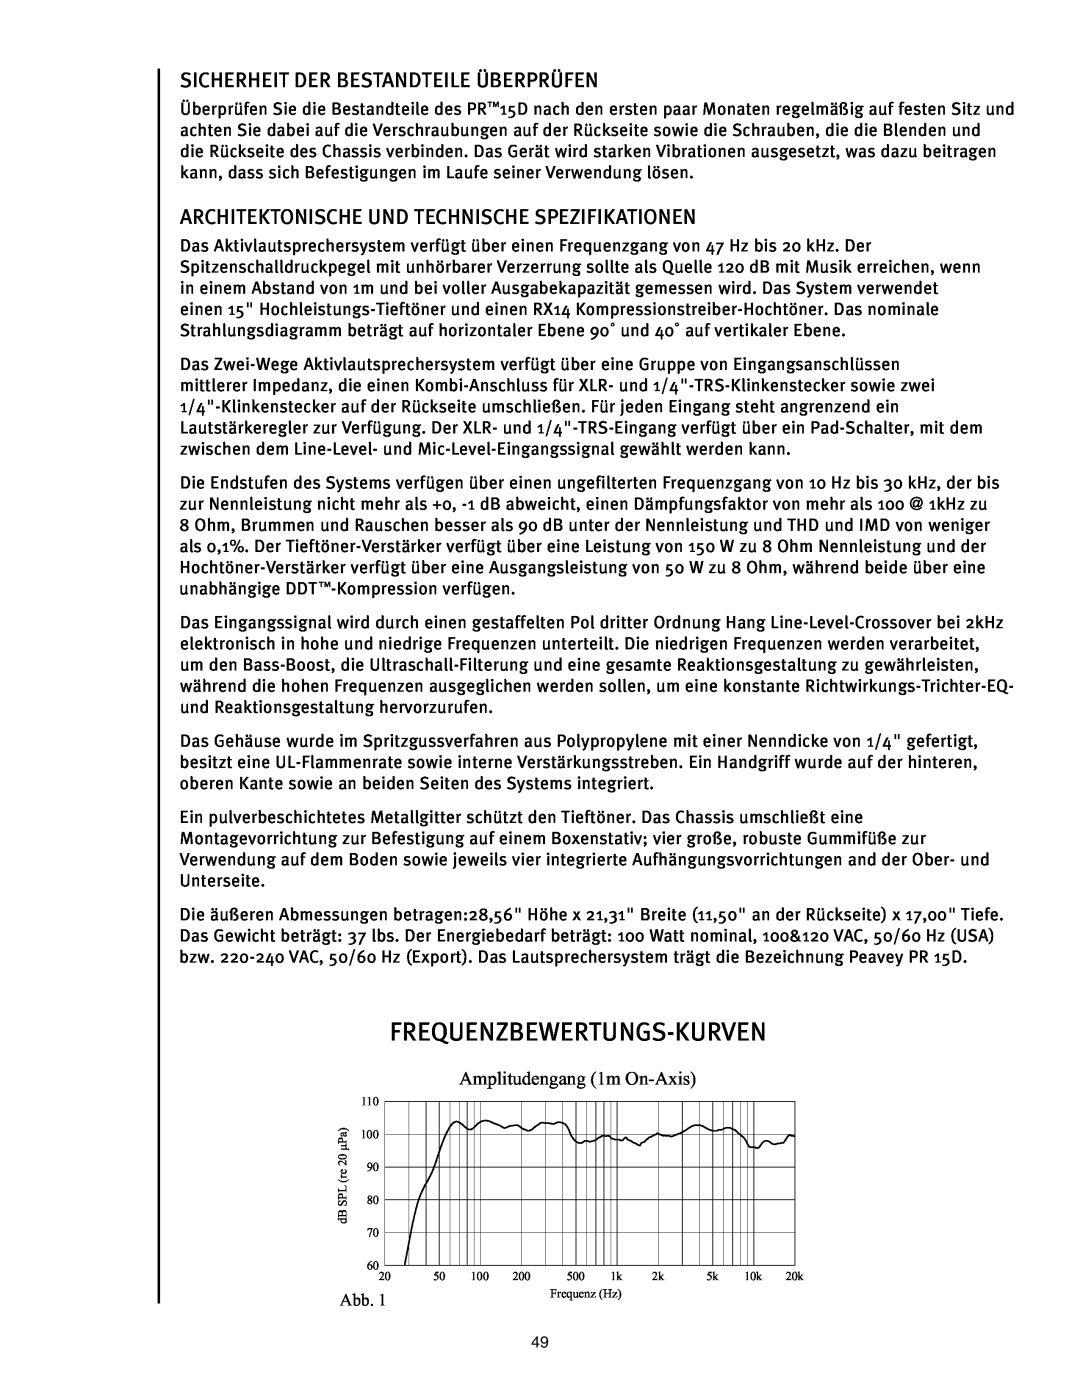 Peavey PR 15 D manual Frequenzbewertungs-Kurven, Sicherheit Der Bestandteile Überprüfen, Amplitudengang 1m On-Axis, Abb 